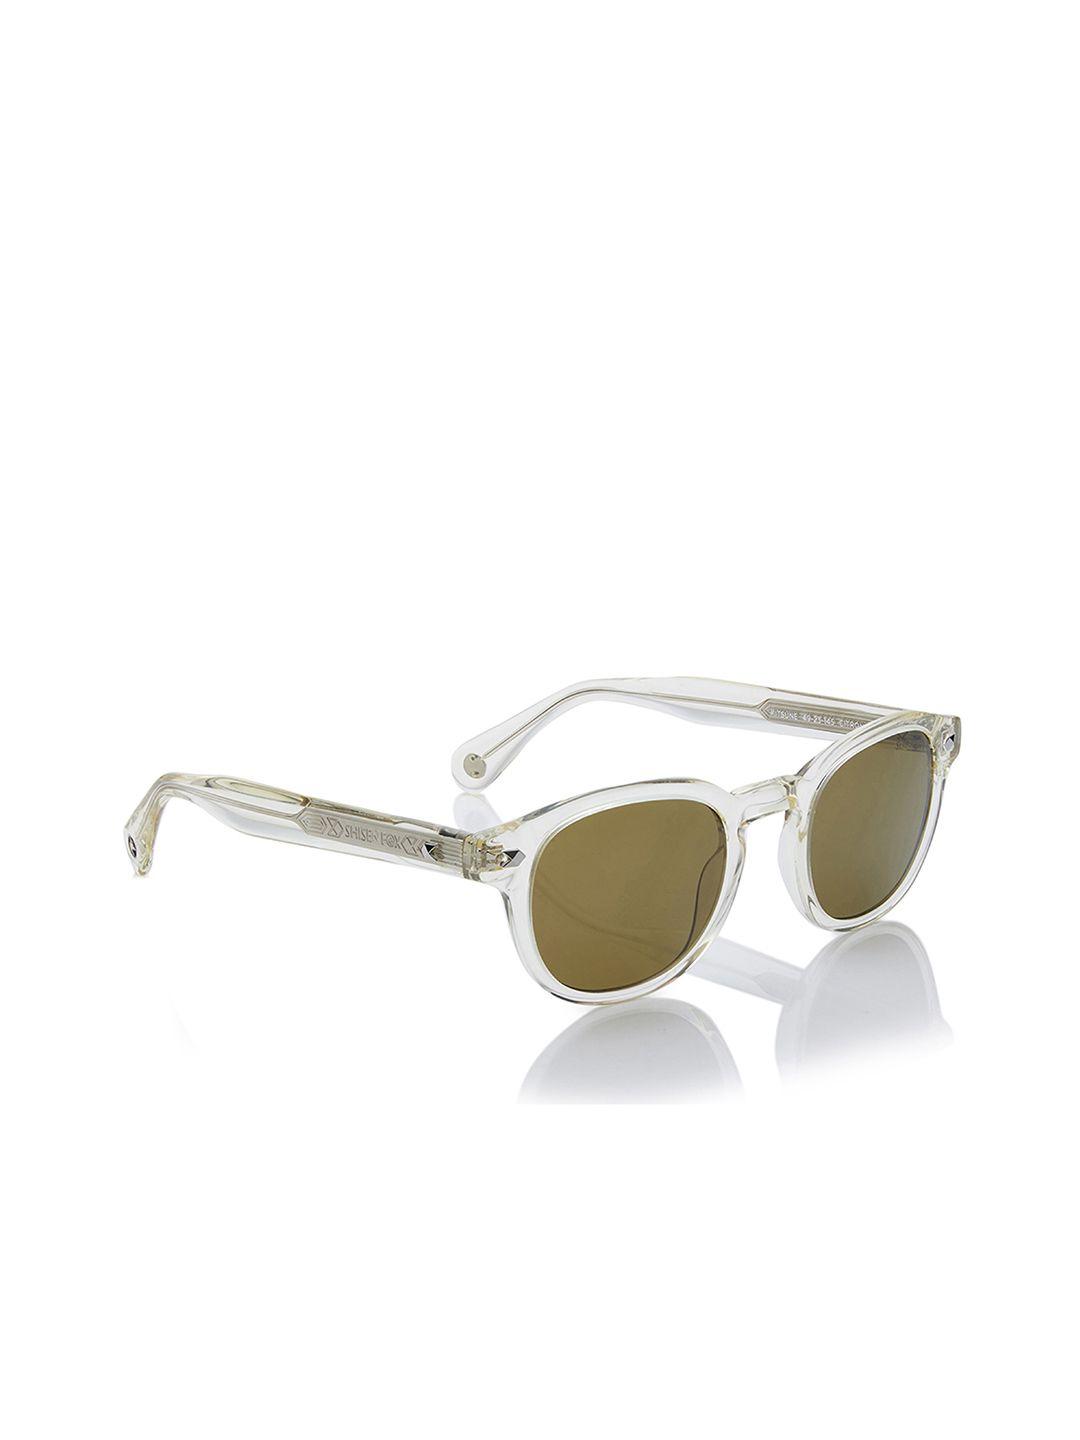 shisen fox unisex oval sunglasses with uv protected lens sg033